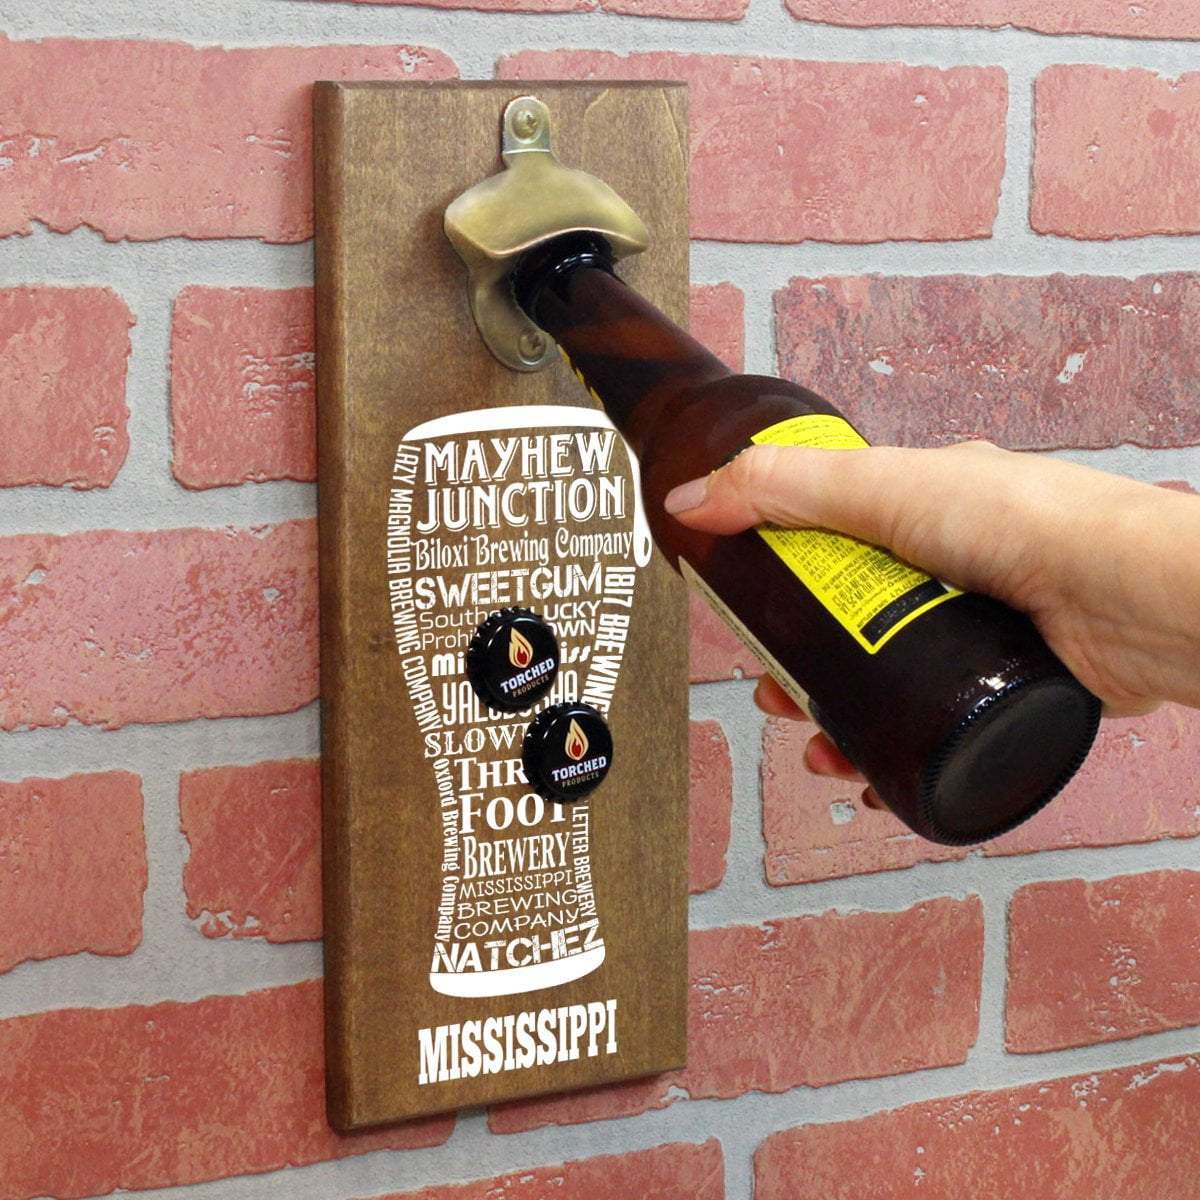 Fanmats  Mississippi State Bulldogs Keychain Bottle Opener